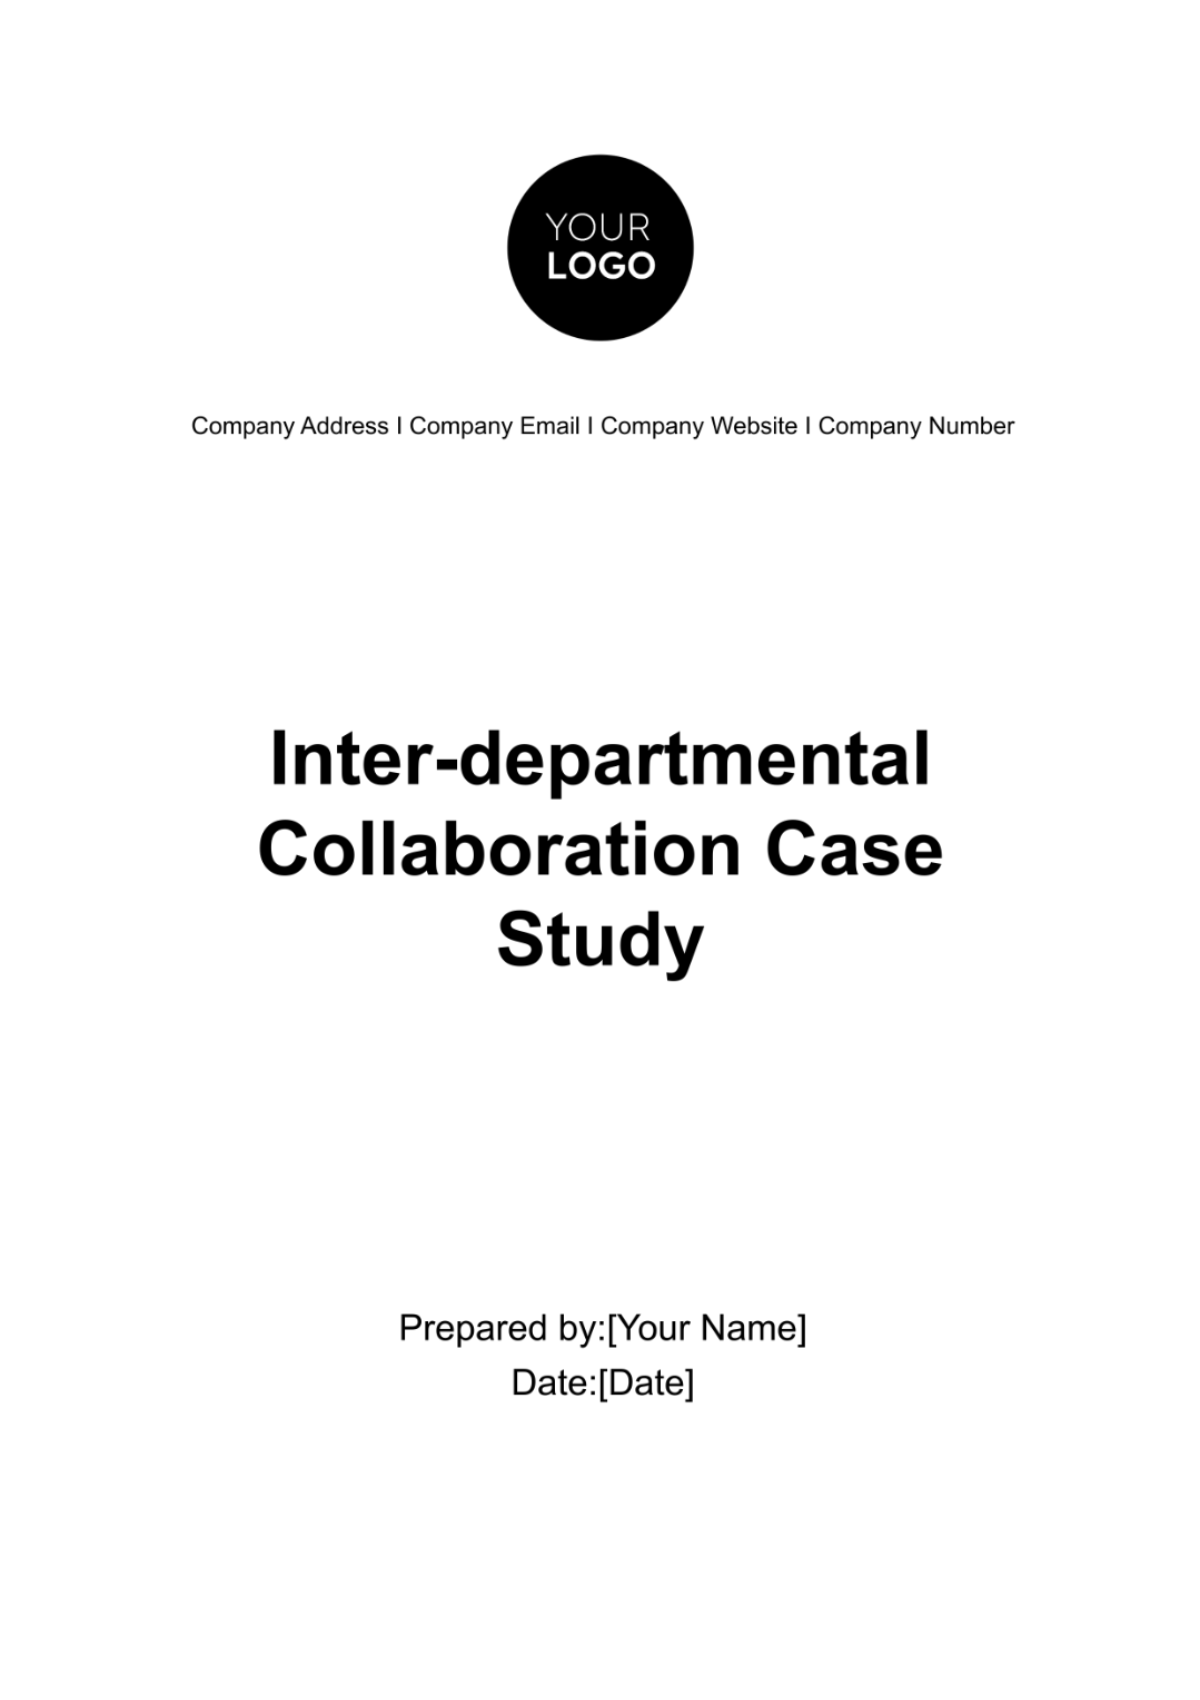 Inter-departmental Collaboration Case Study HR Template